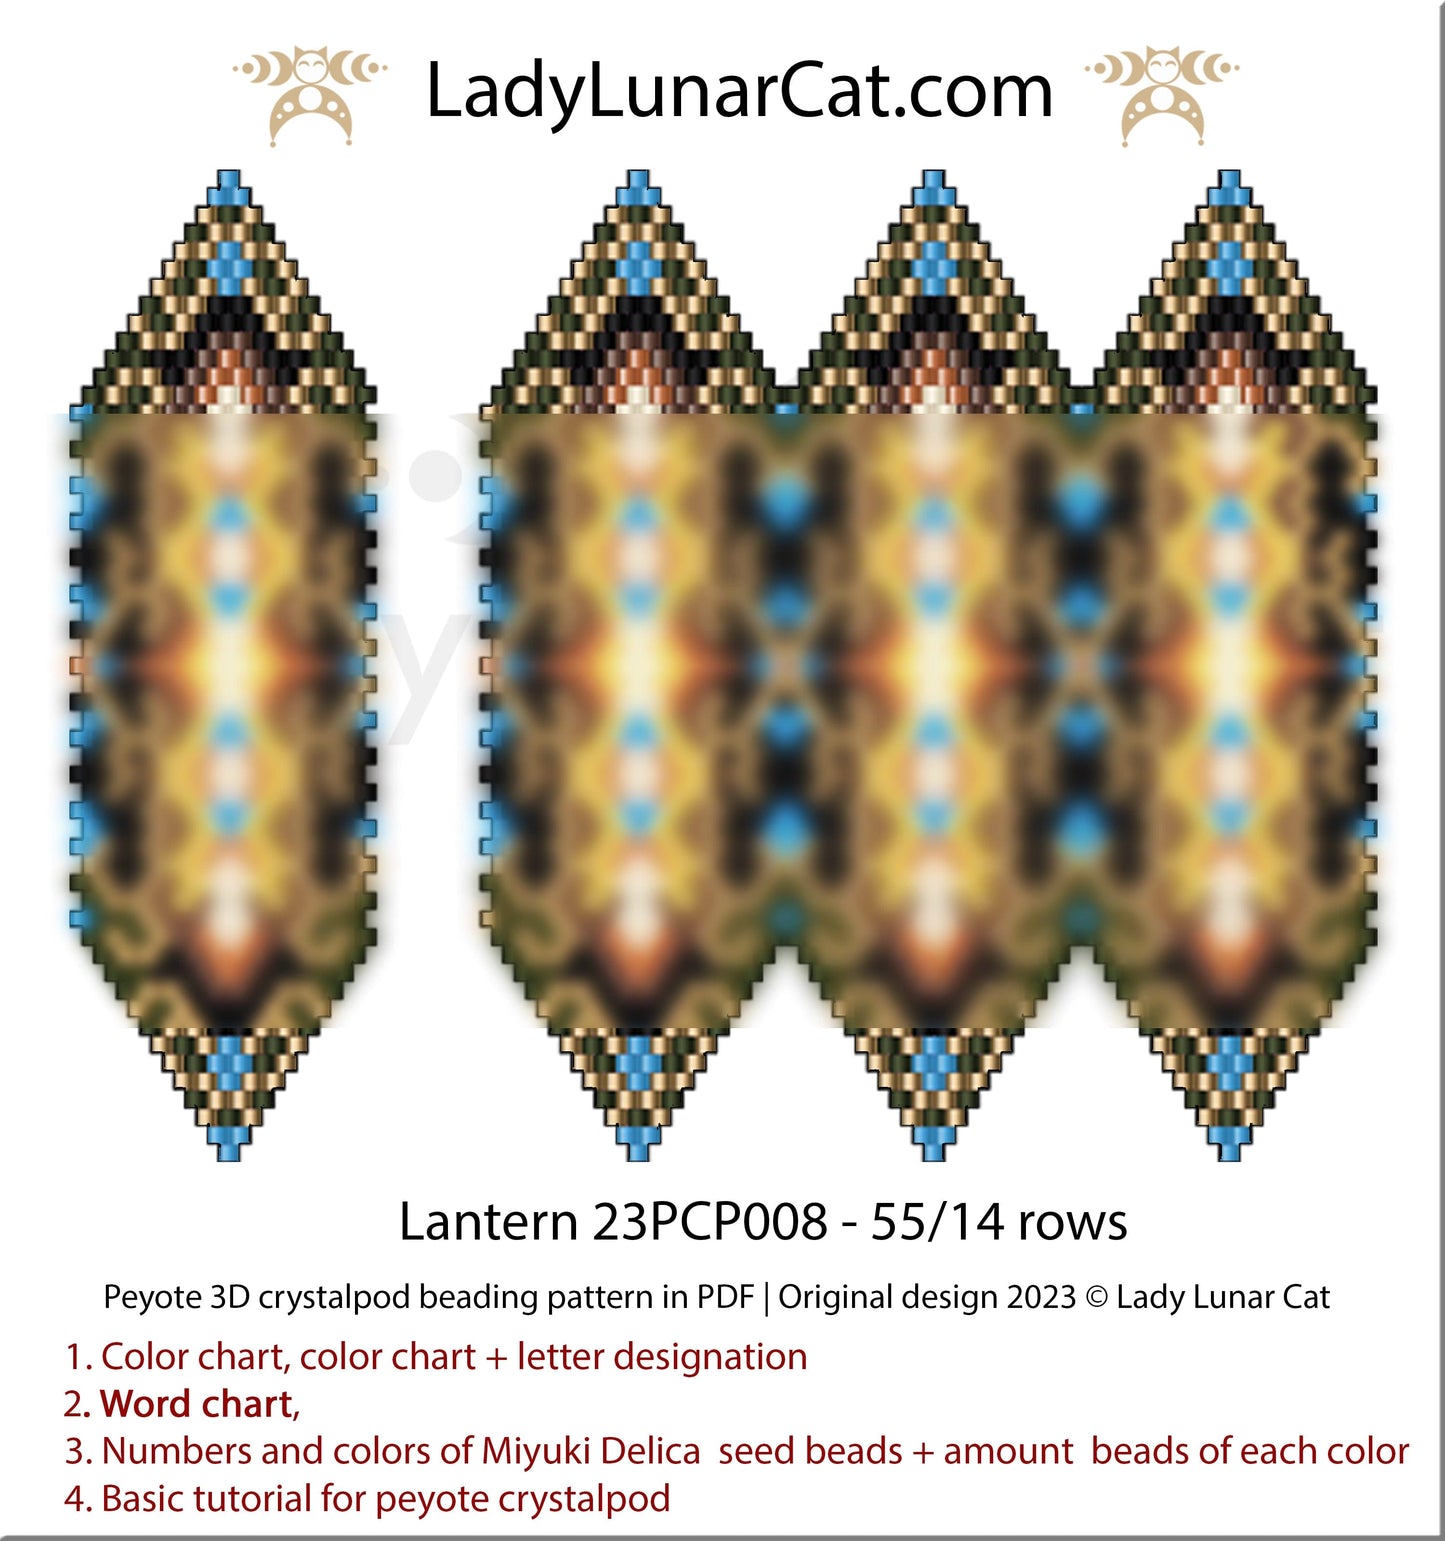 Peyote pod pattern or crystalpod pattern for beading Lantern 23PCP008 LadyLunarCat